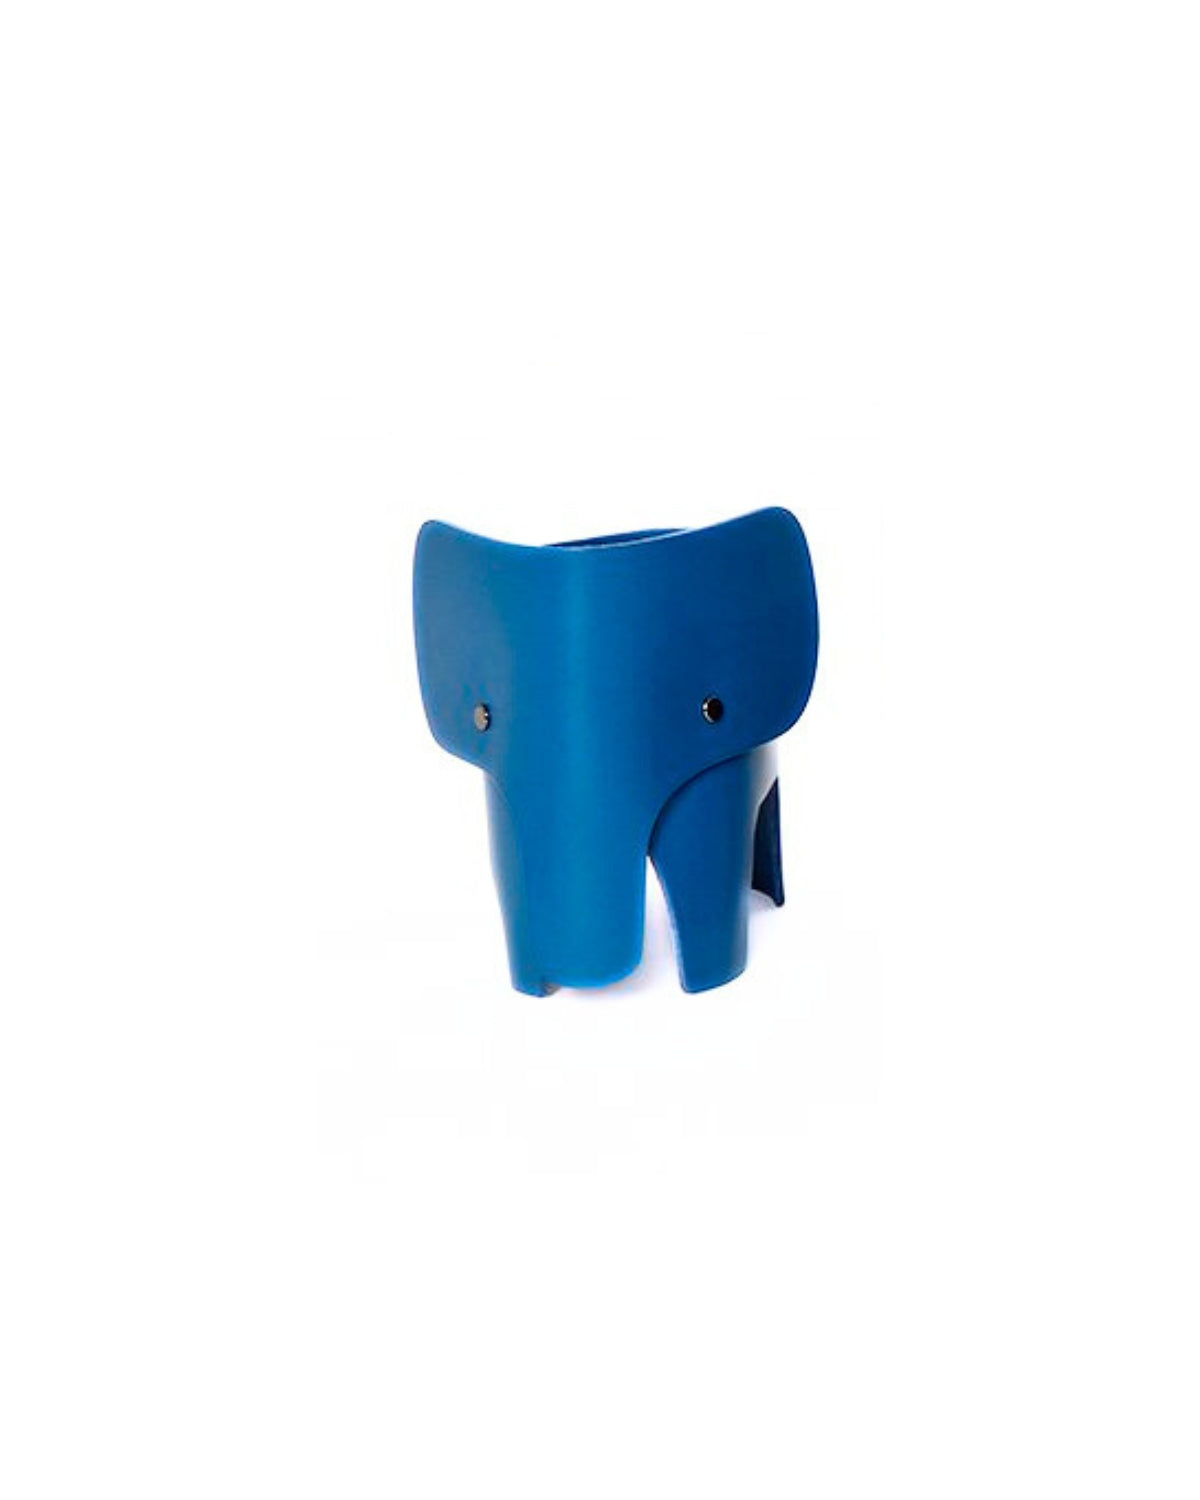 Lamp ELEPHANT Blue